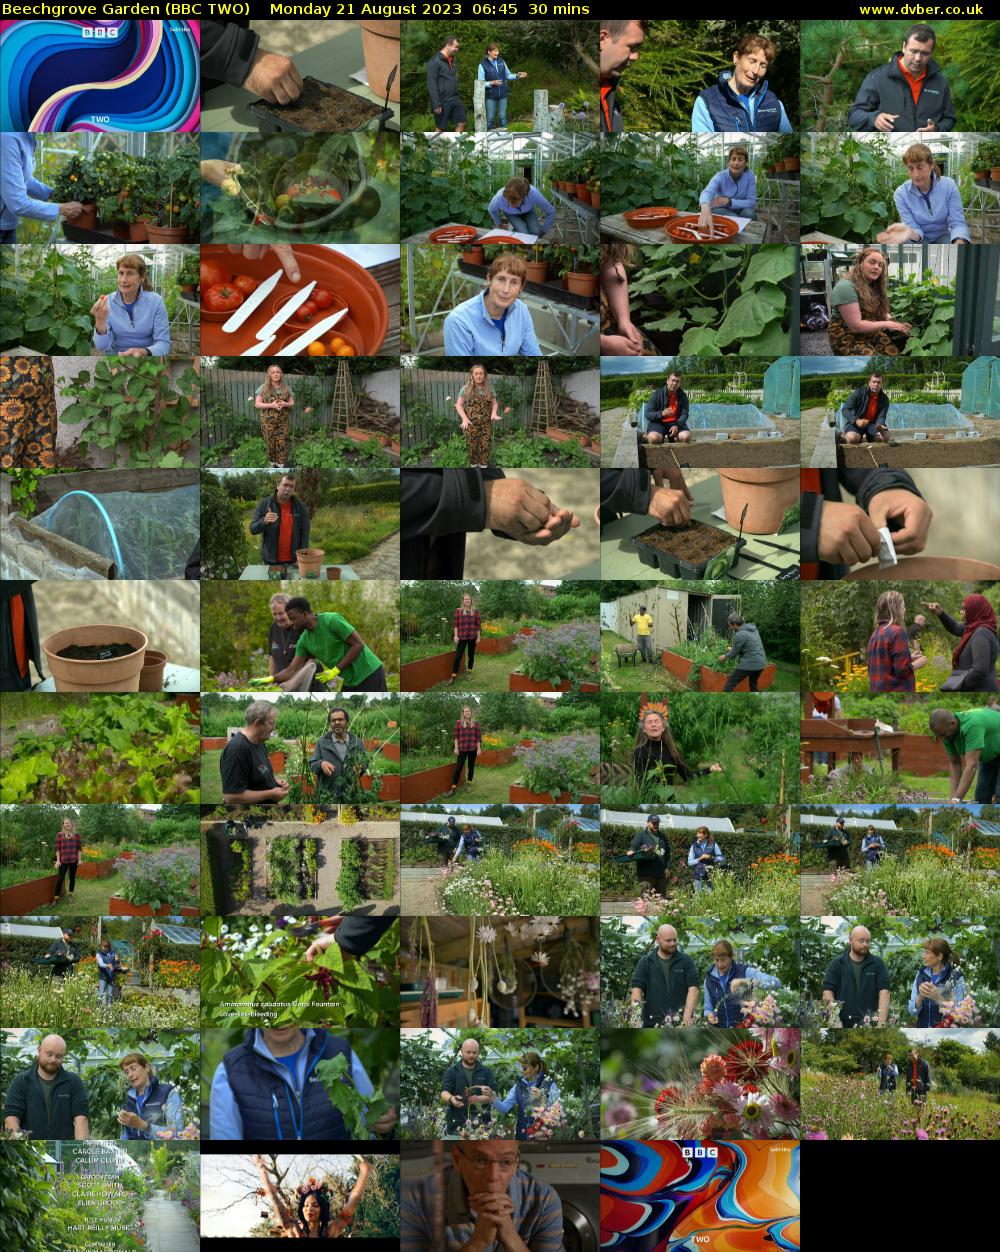 Beechgrove Garden (BBC TWO) Monday 21 August 2023 06:45 - 07:15